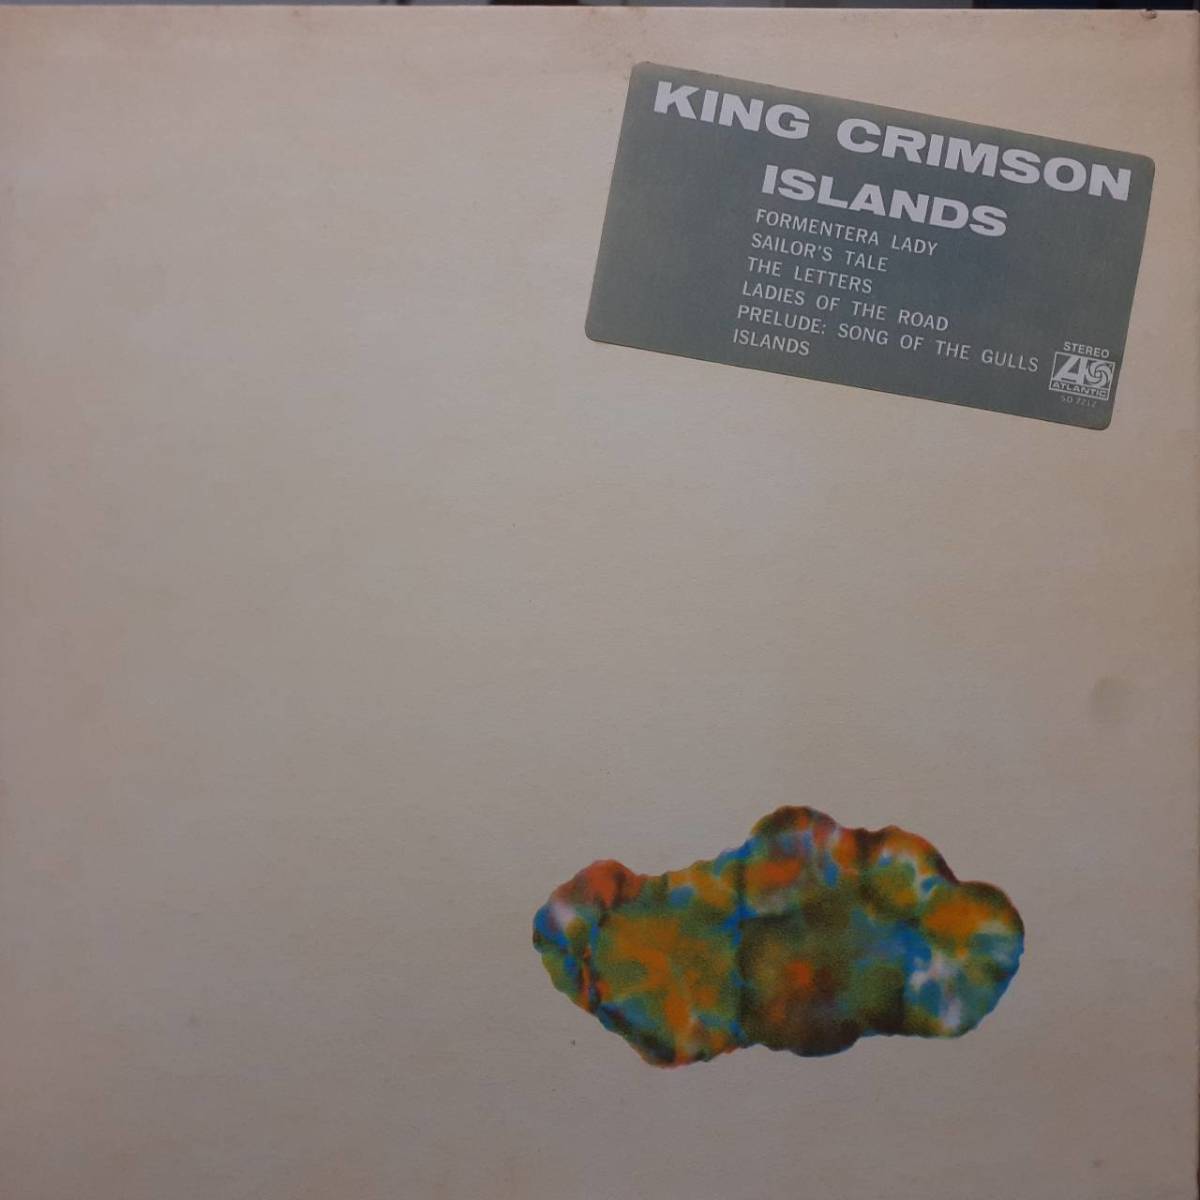 Us Atlantic Original LP! Адрес Бродвей нет! King Crimson / Islands 1972 с SD7212 High Picker! Кейт Типпетт Боз Баррелл